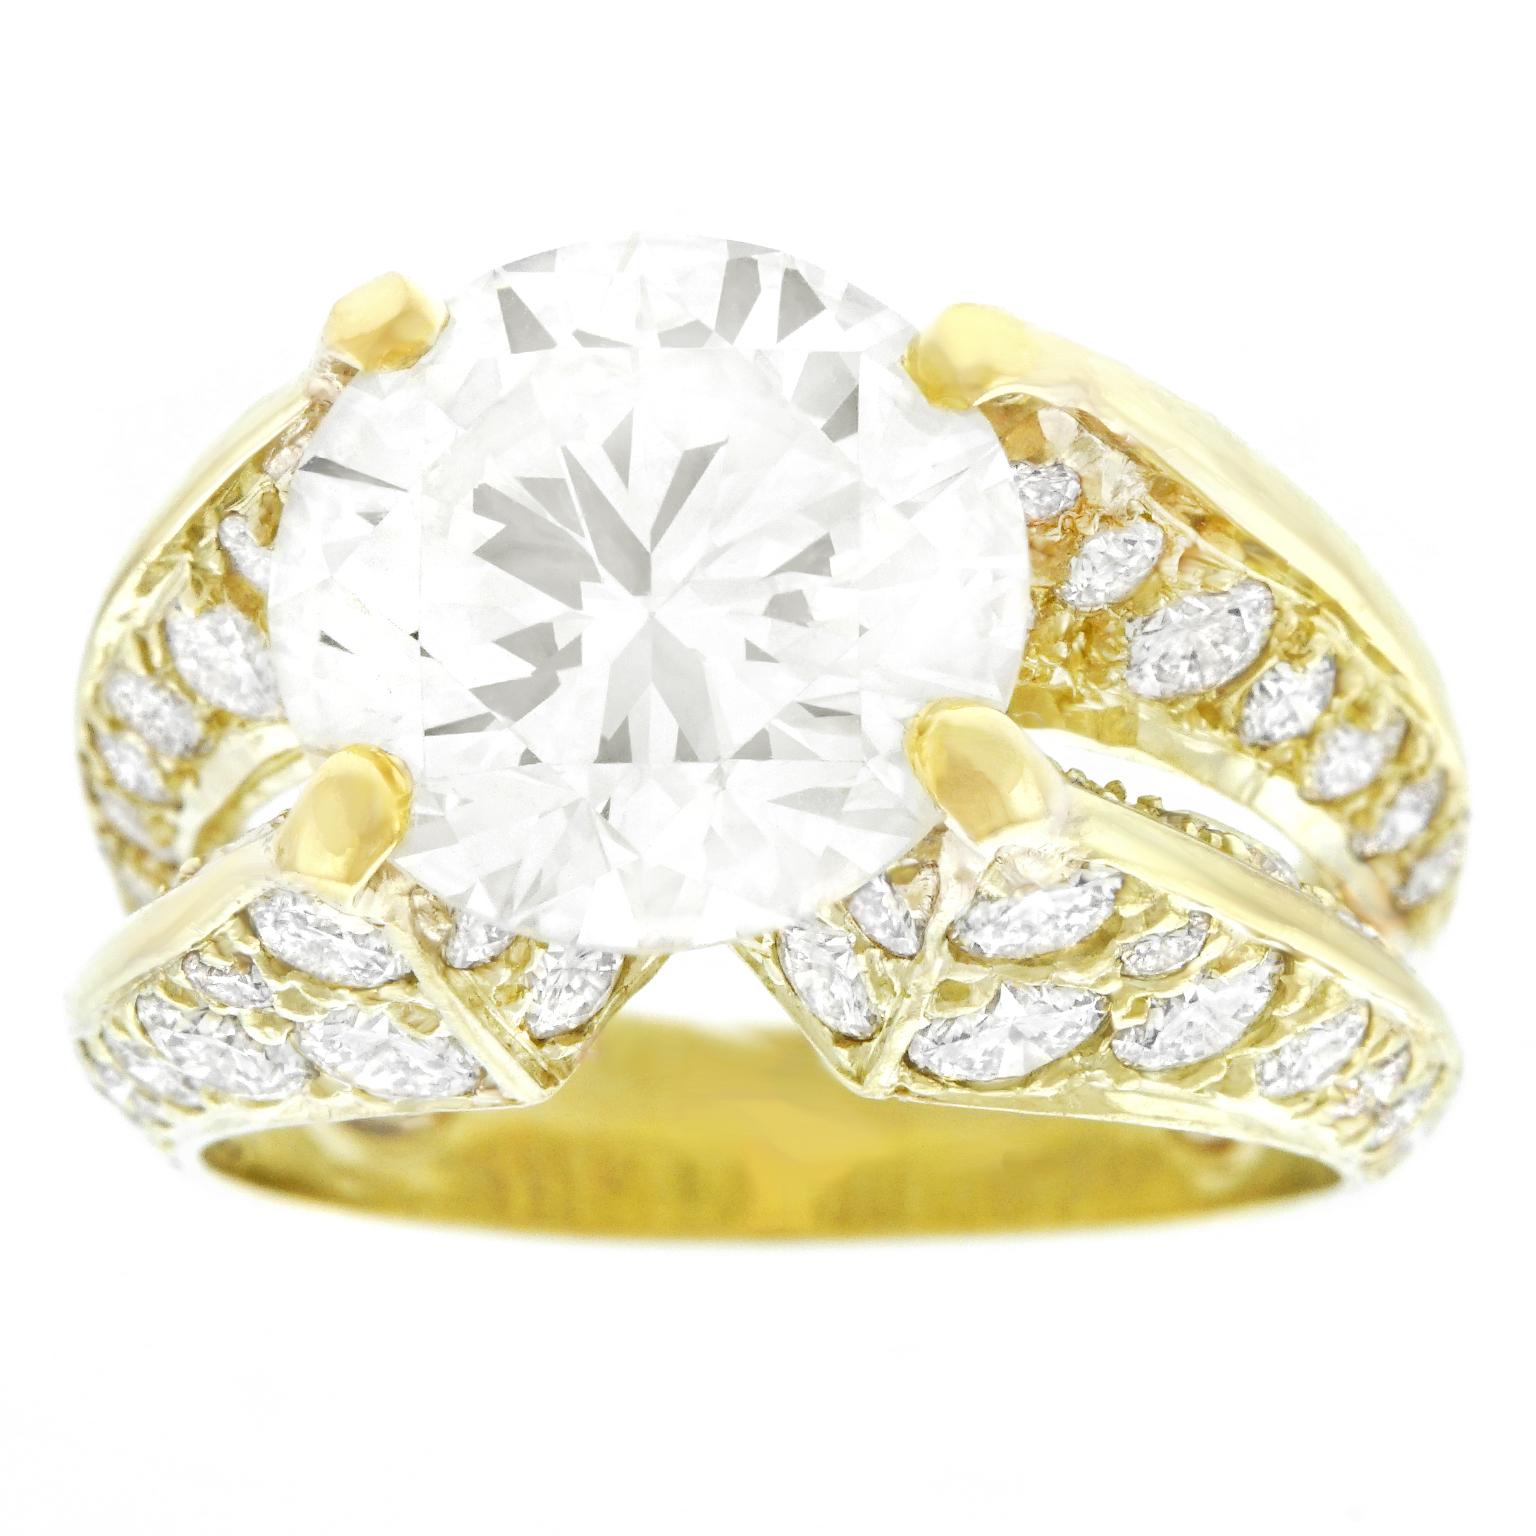 Jose Hess Spectacular Diamond set Gold Ring GIA 4.22 Carat